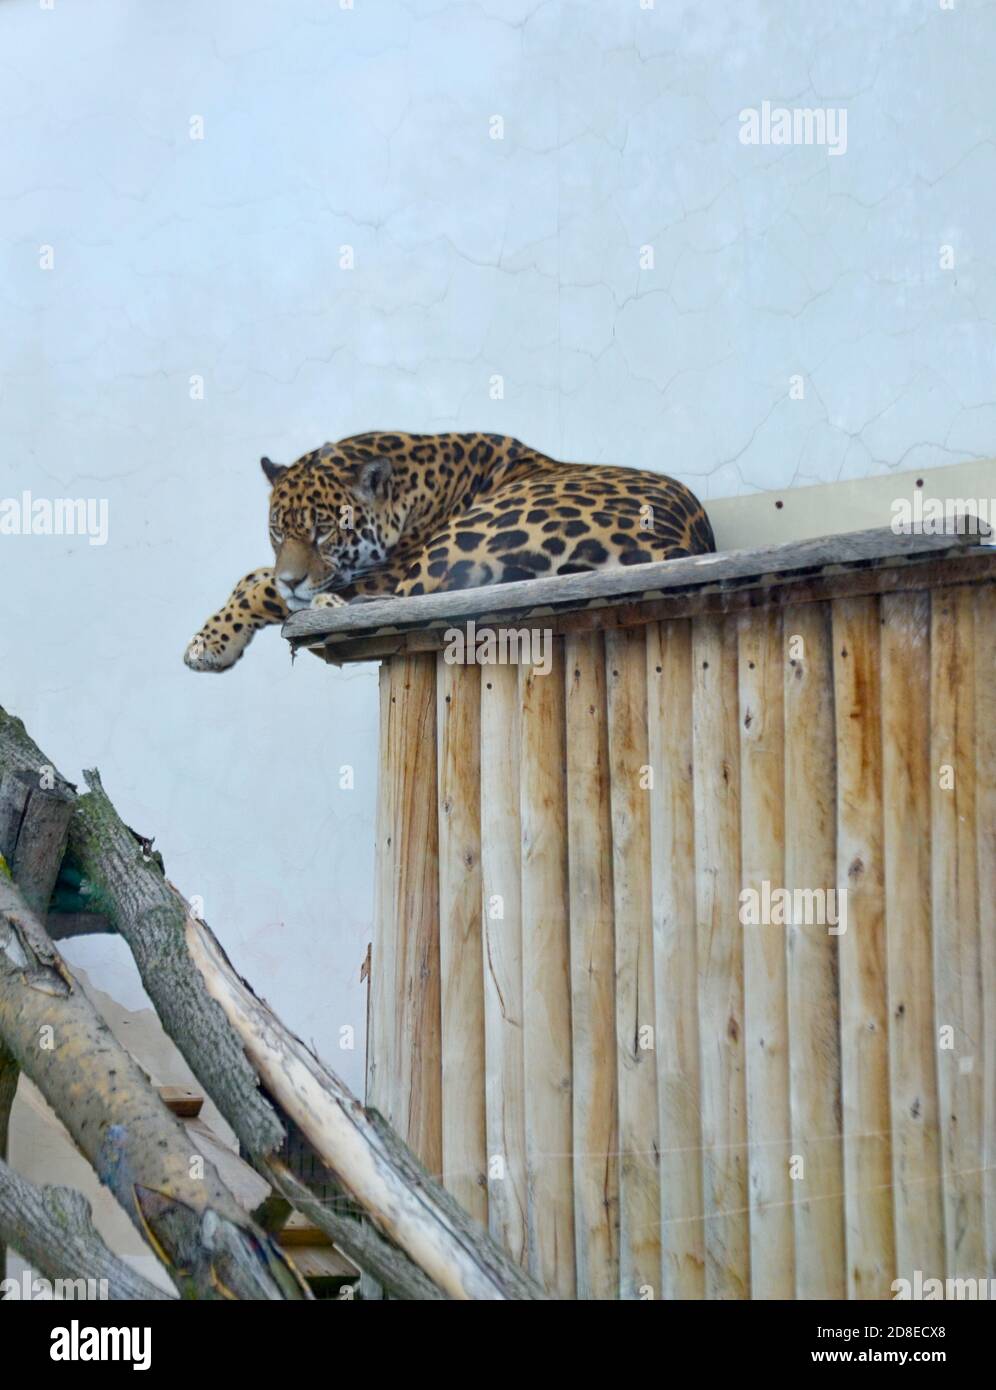 Russia Penza October 24, 2020: wild cat leopard in zoo blurred focus Stock Photo